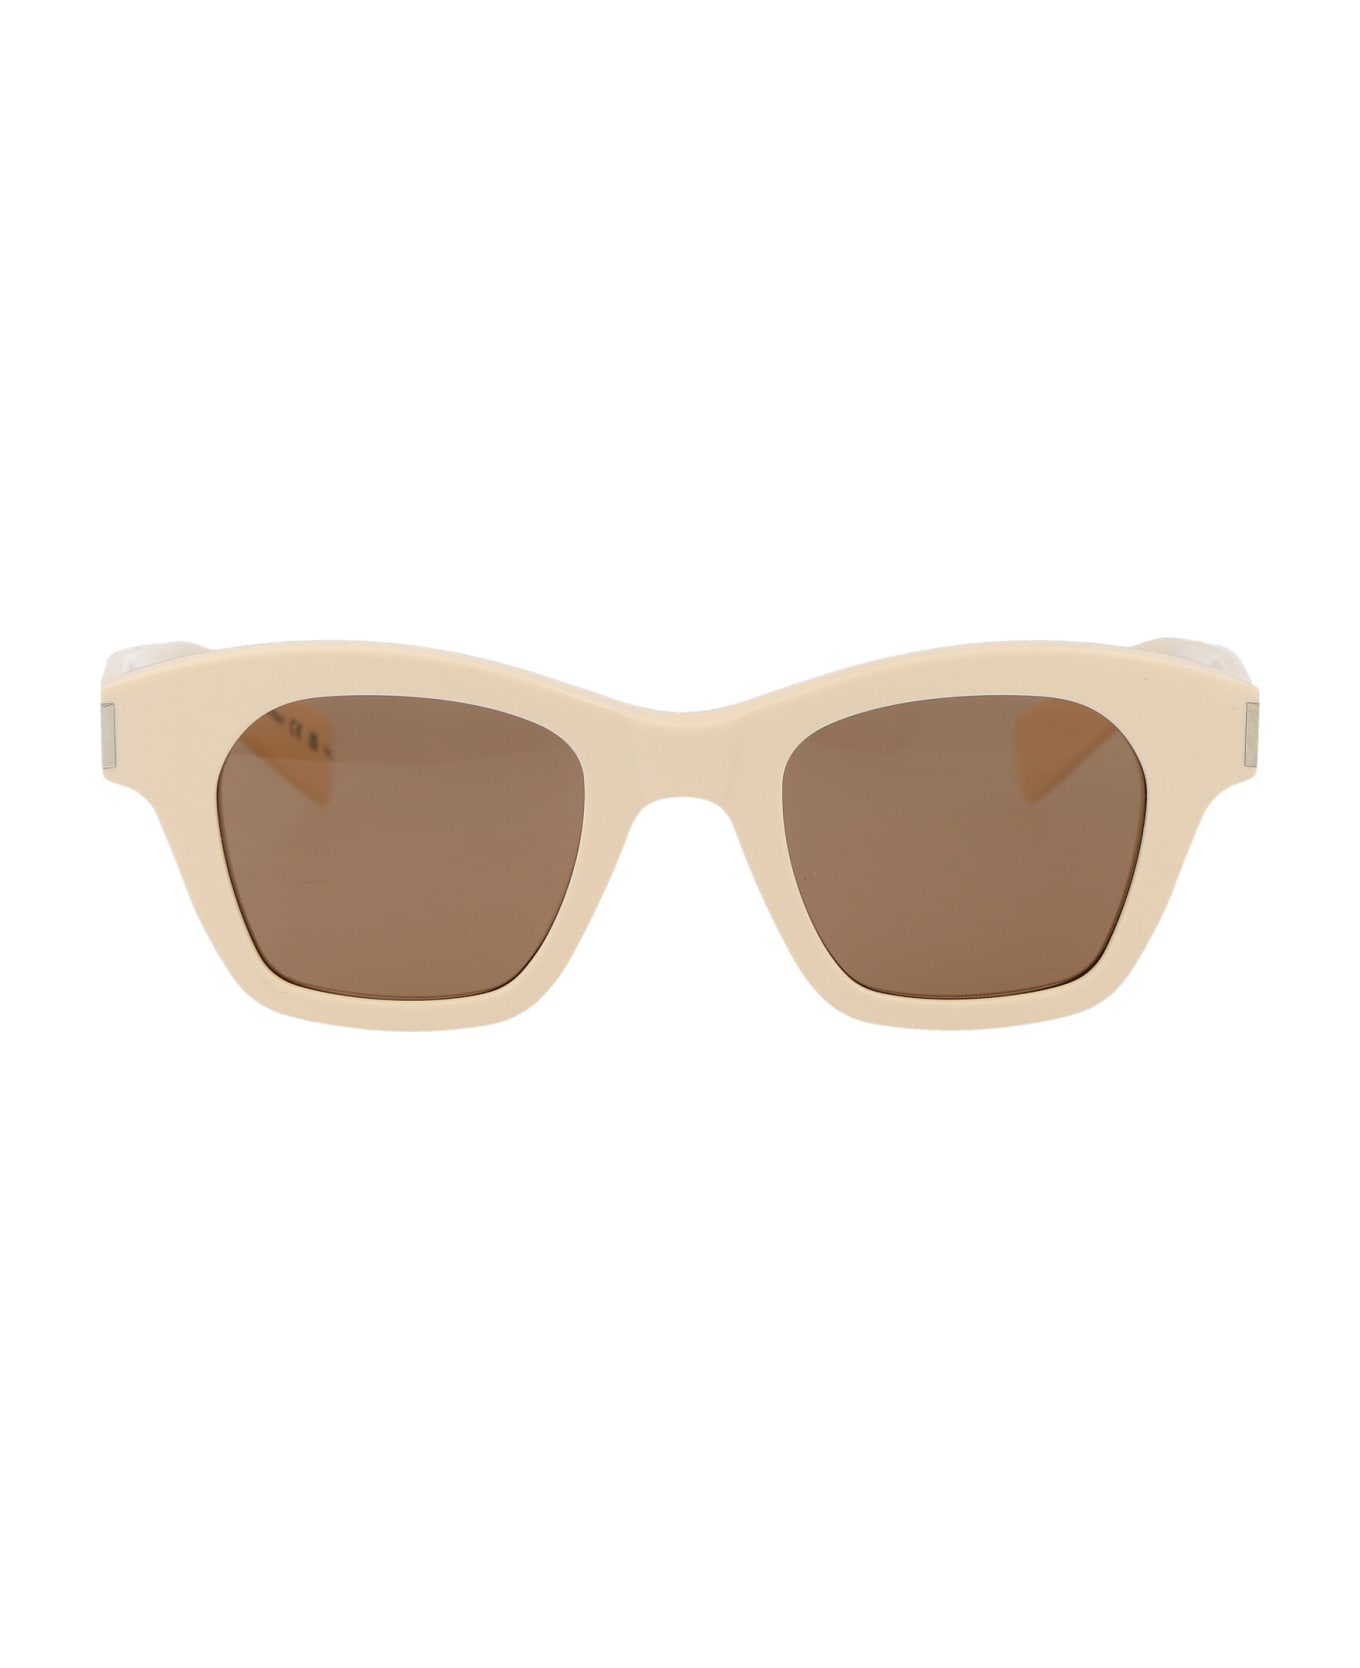 Saint Laurent Eyewear Sl 592 Sunglasses - 004 IVORY IVORY BROWN